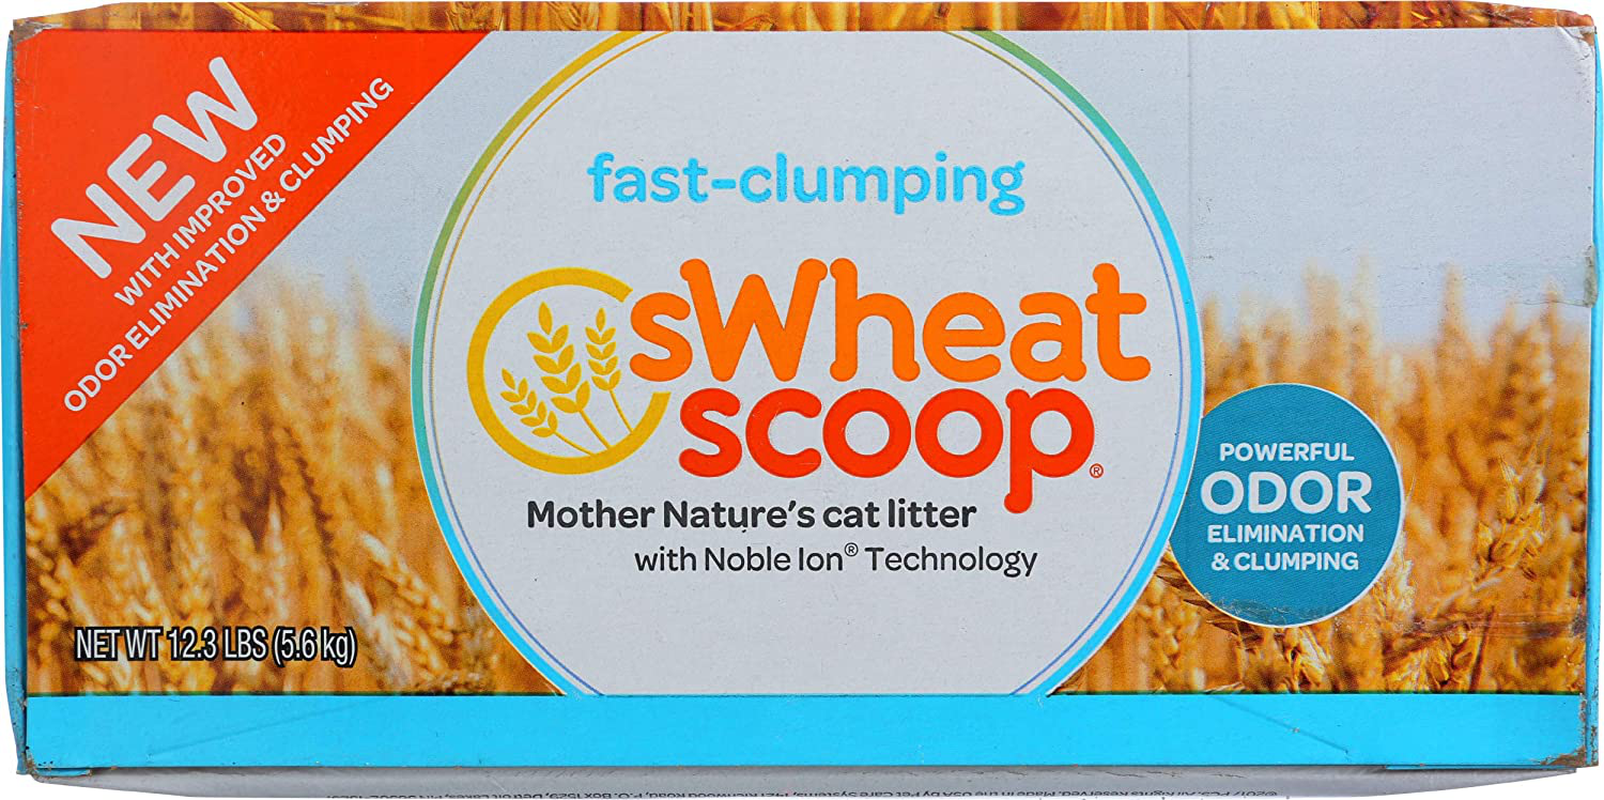 Swheat Scoop Multi-Cat All-Natural Clumping Cat Litter, 12.3Lb Box